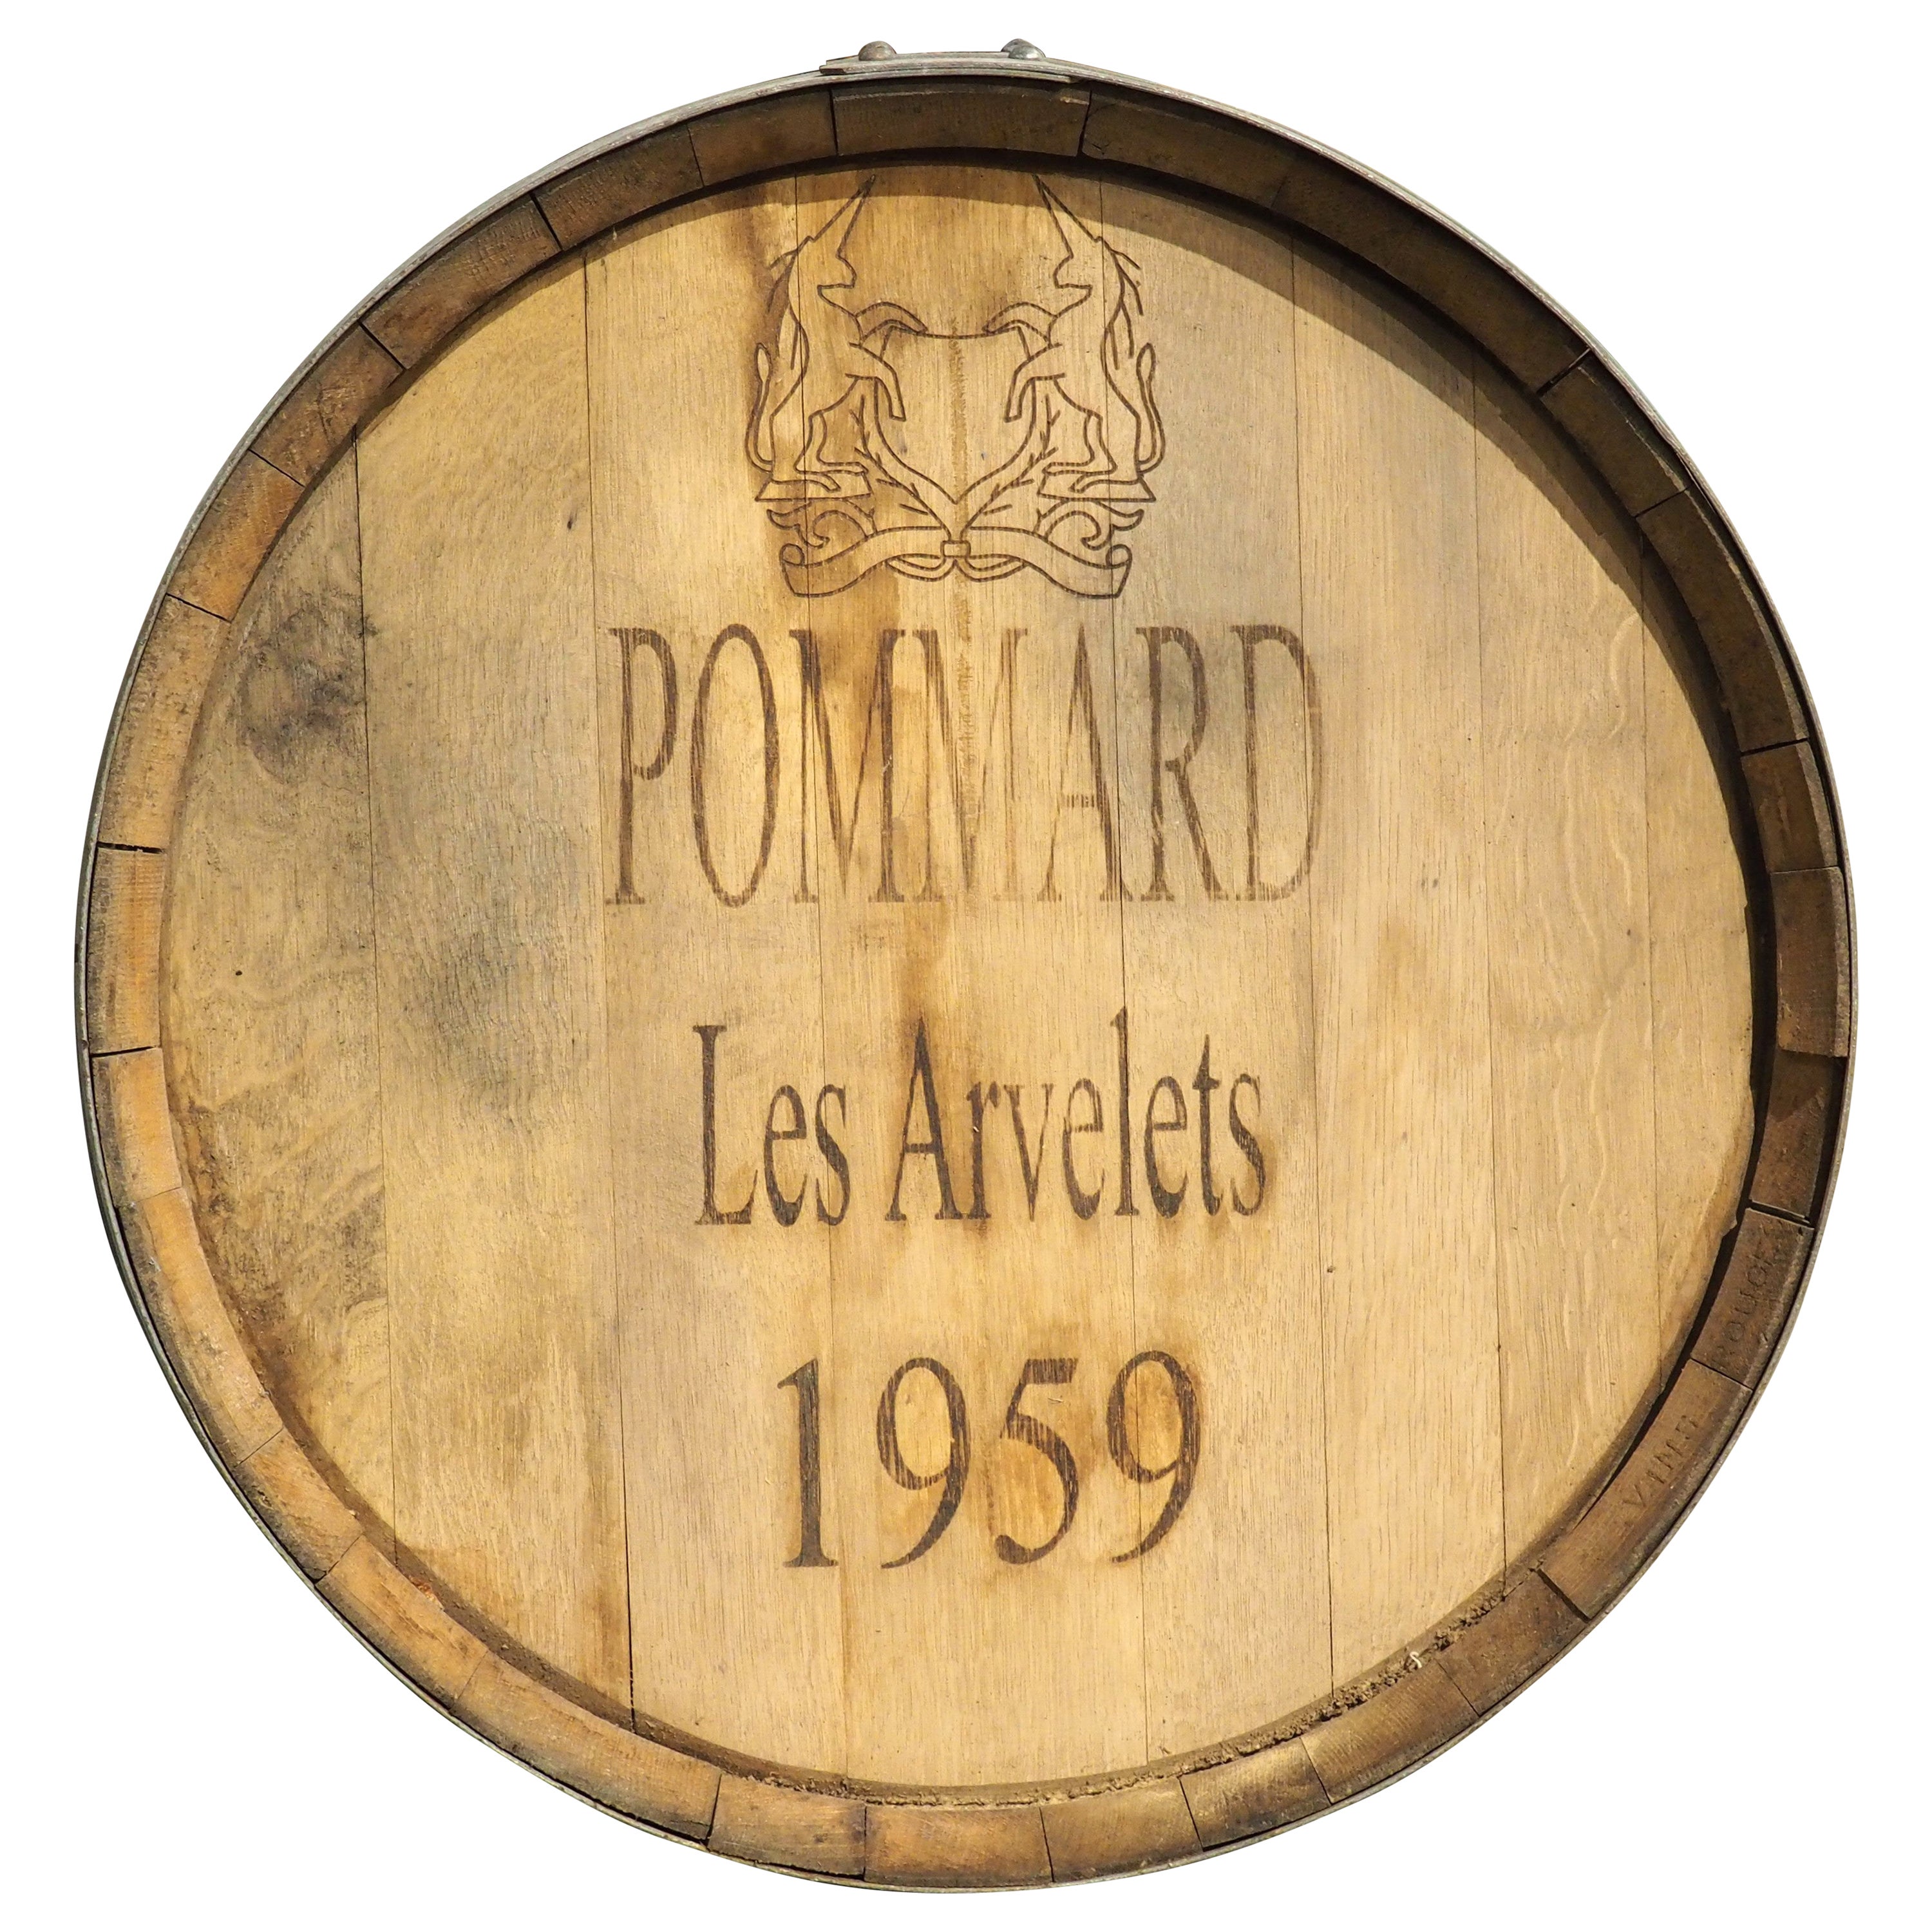 French Wine Barrel Frontage, Pommard Les Arvelets, 1959 For Sale